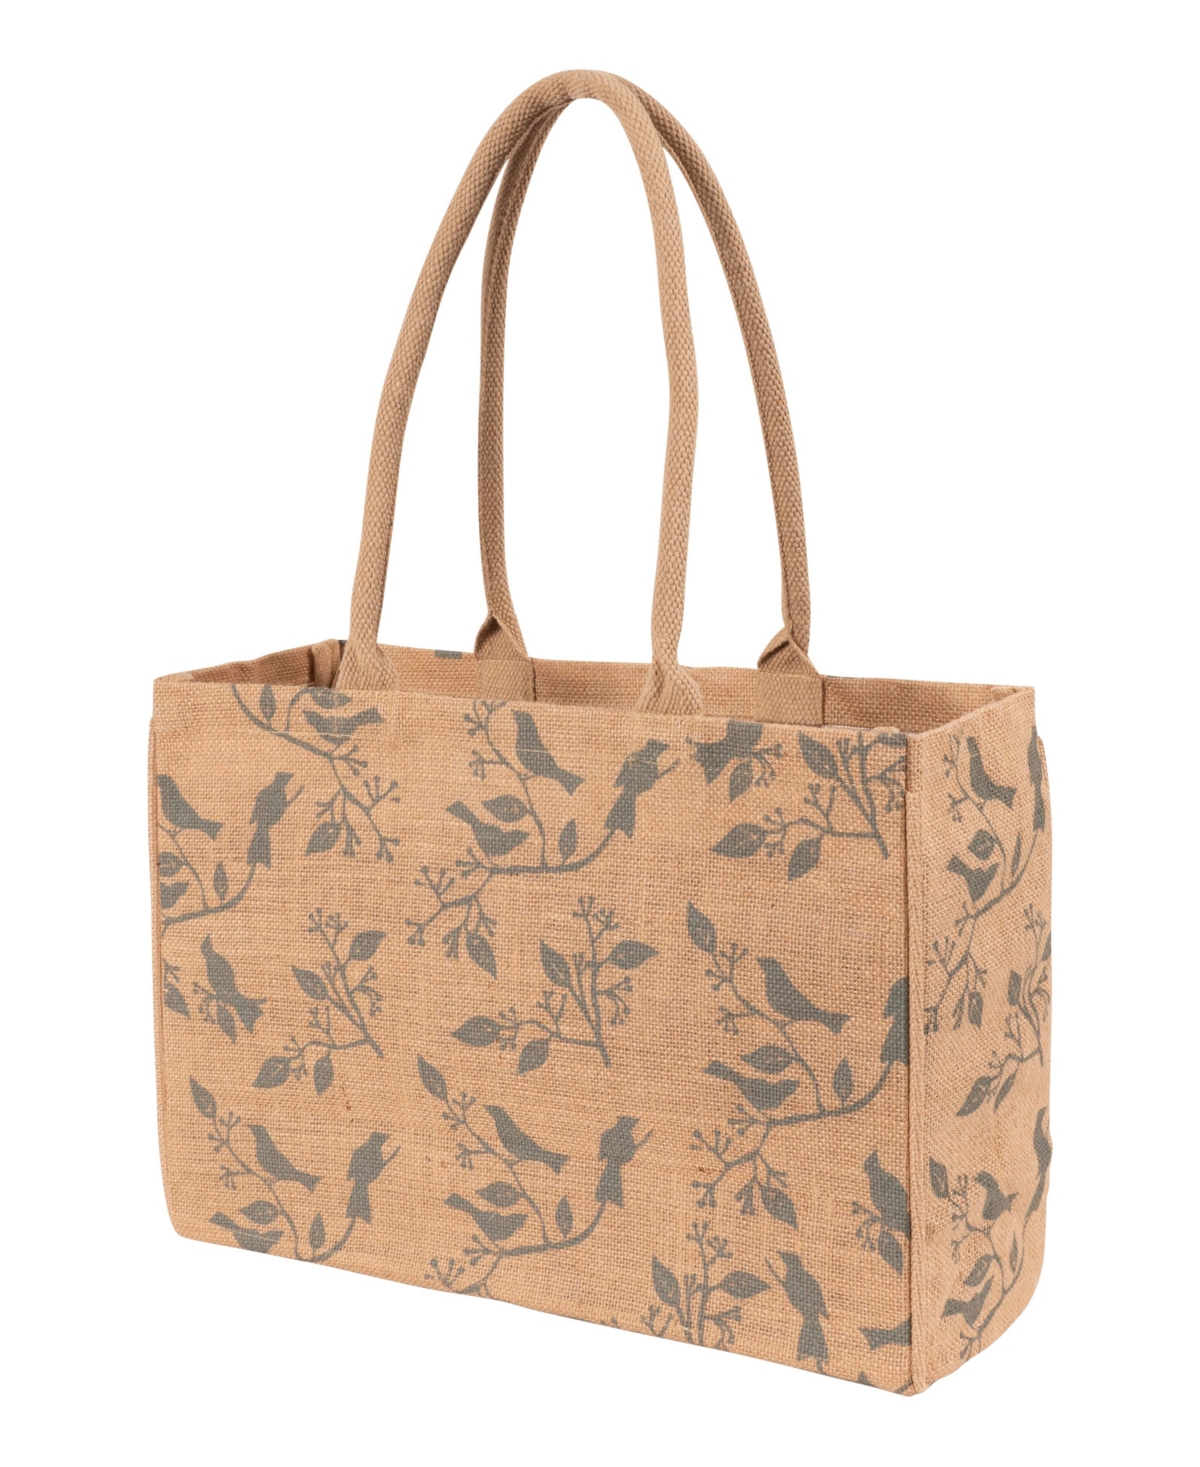 Jute Market Tote Bag with Birds Print - Beige